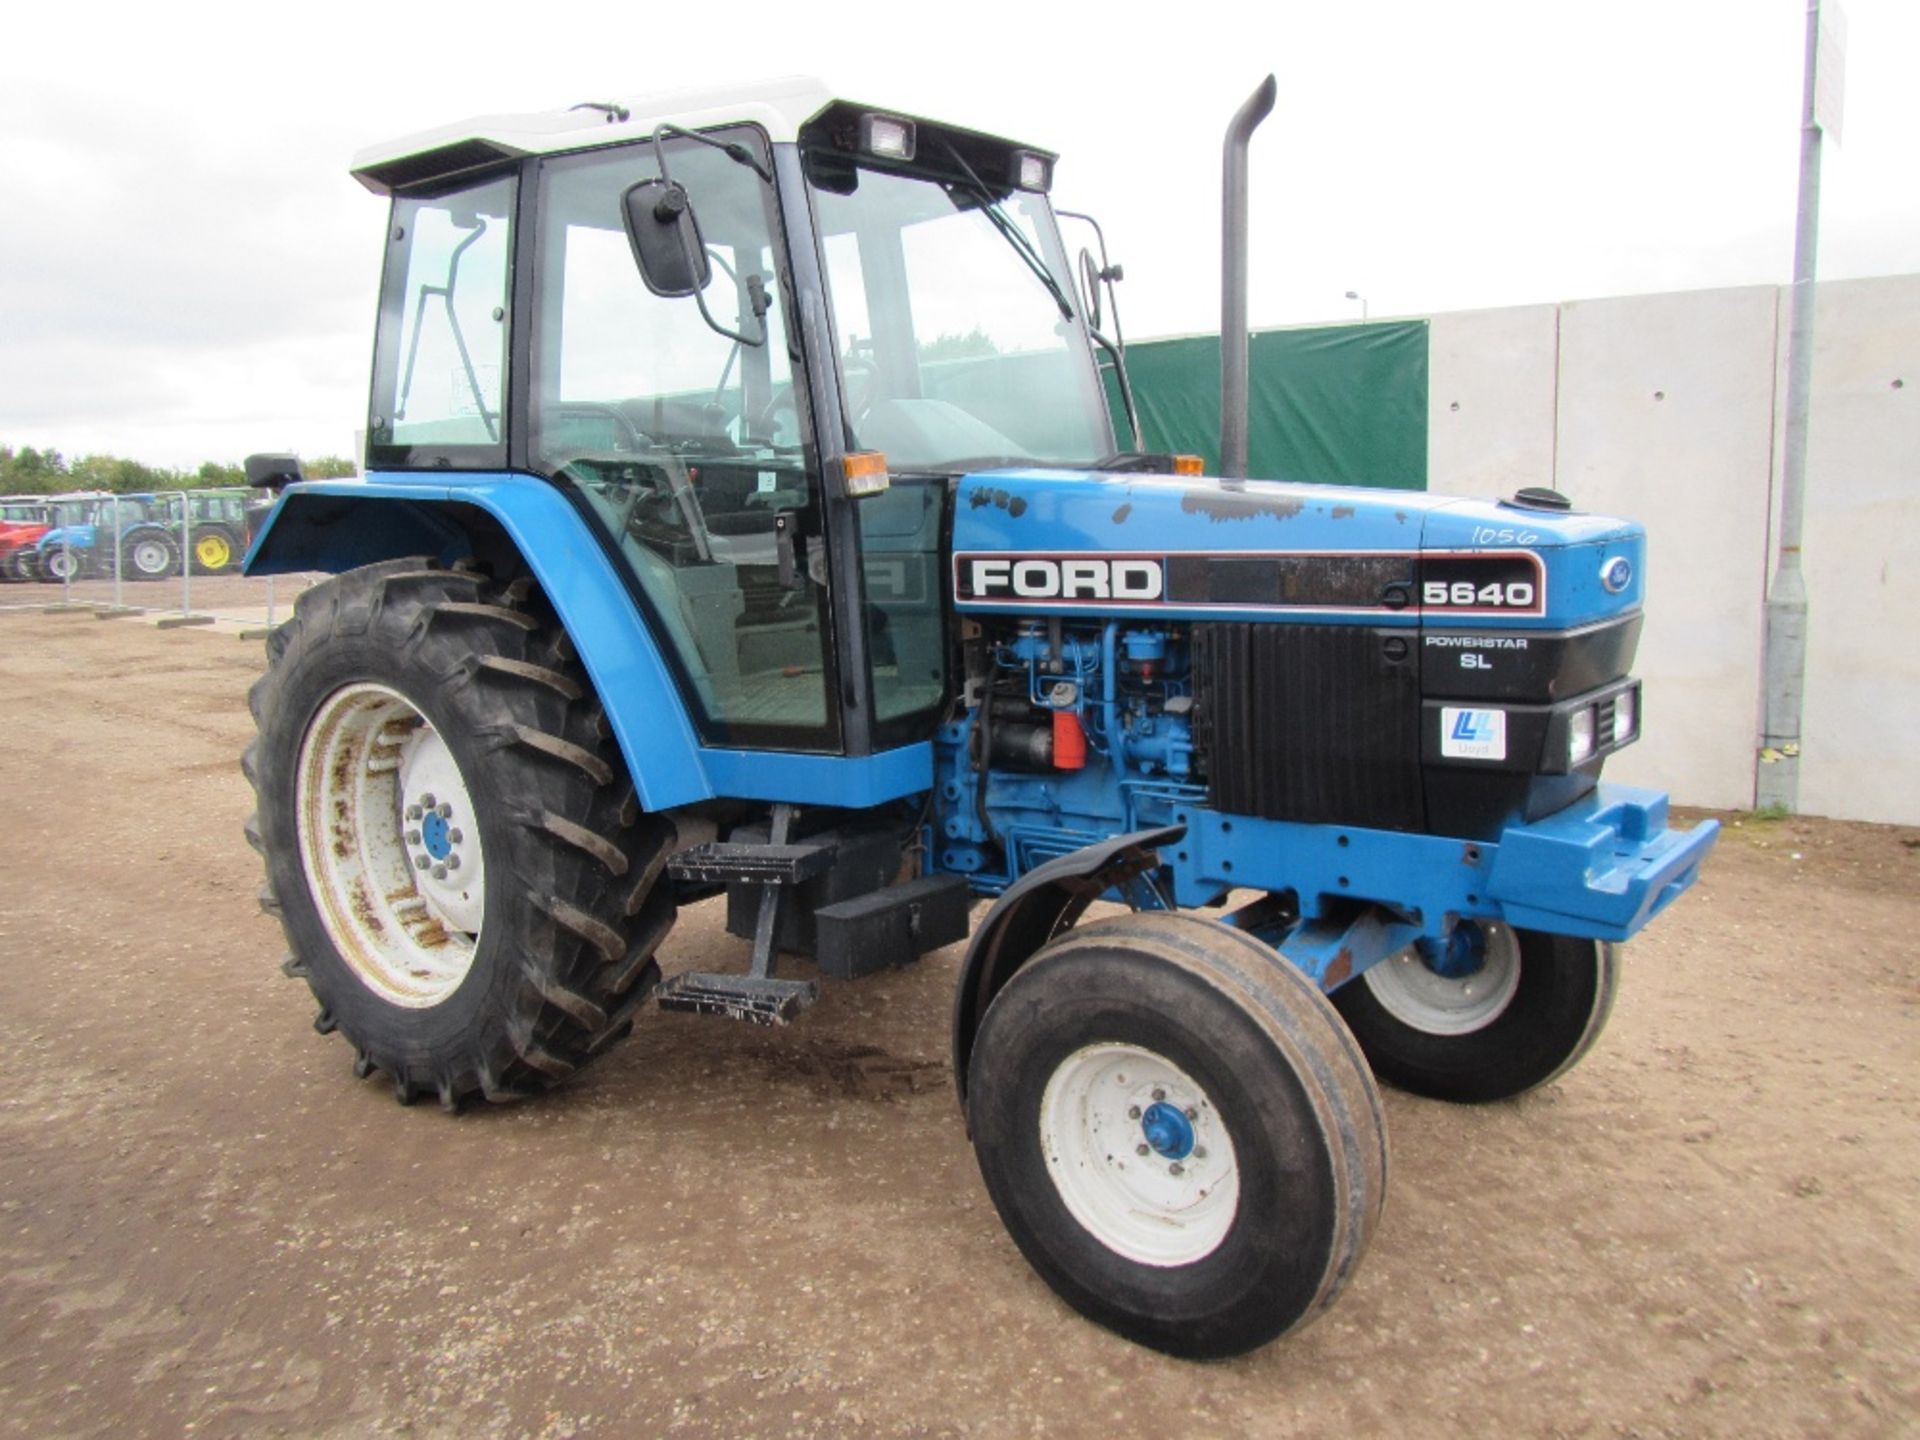 New Holland 5640 2wd Tractor. 4081 hrs. Reg. No. L409 KRM Ser No BD49206 - Image 3 of 17